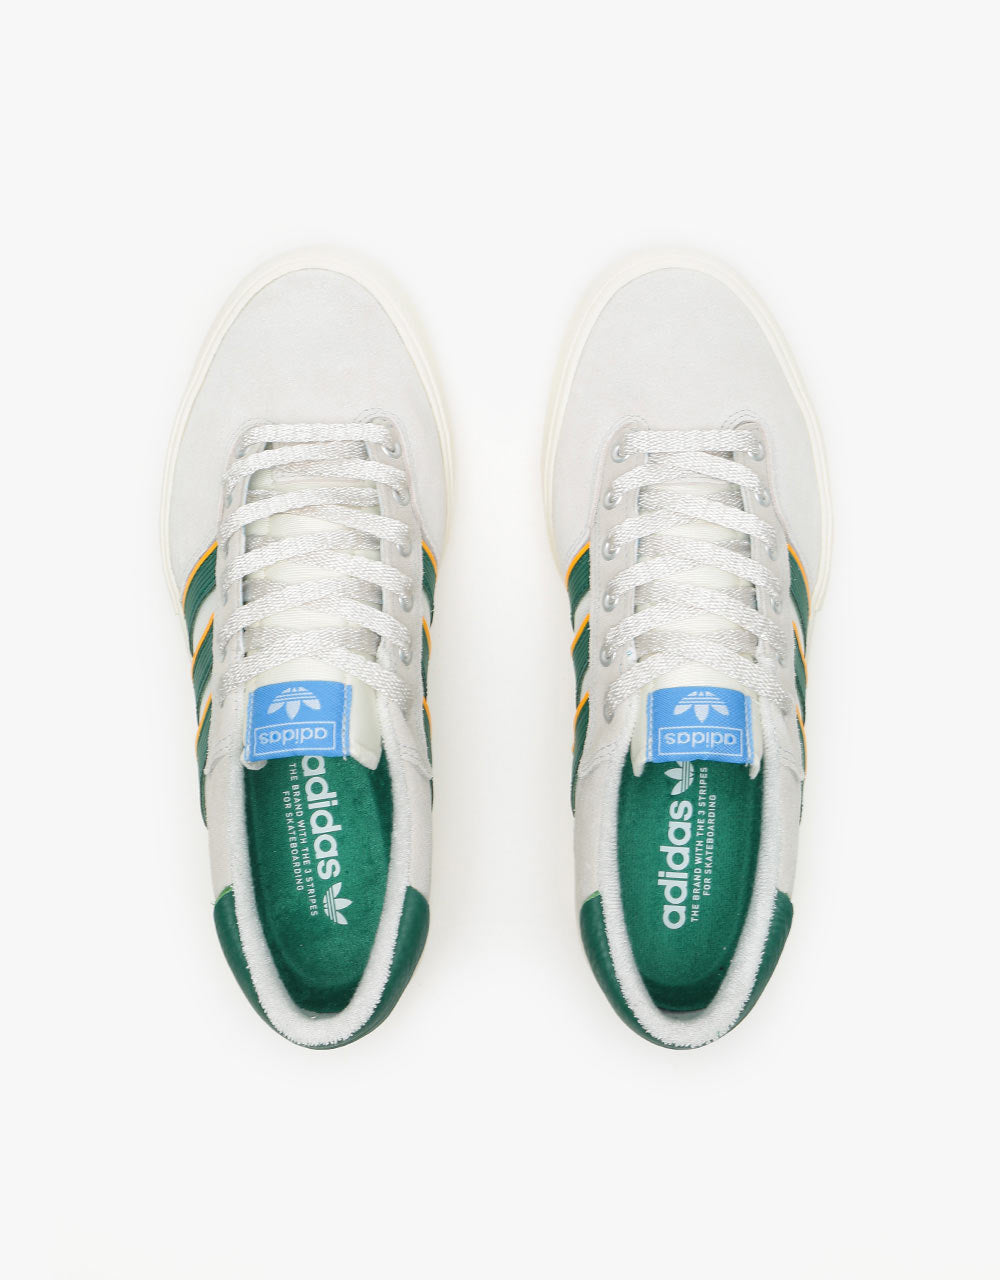 adidas Matchbreak Super Skate Shoes - Crystal White/Collegiate Green/C